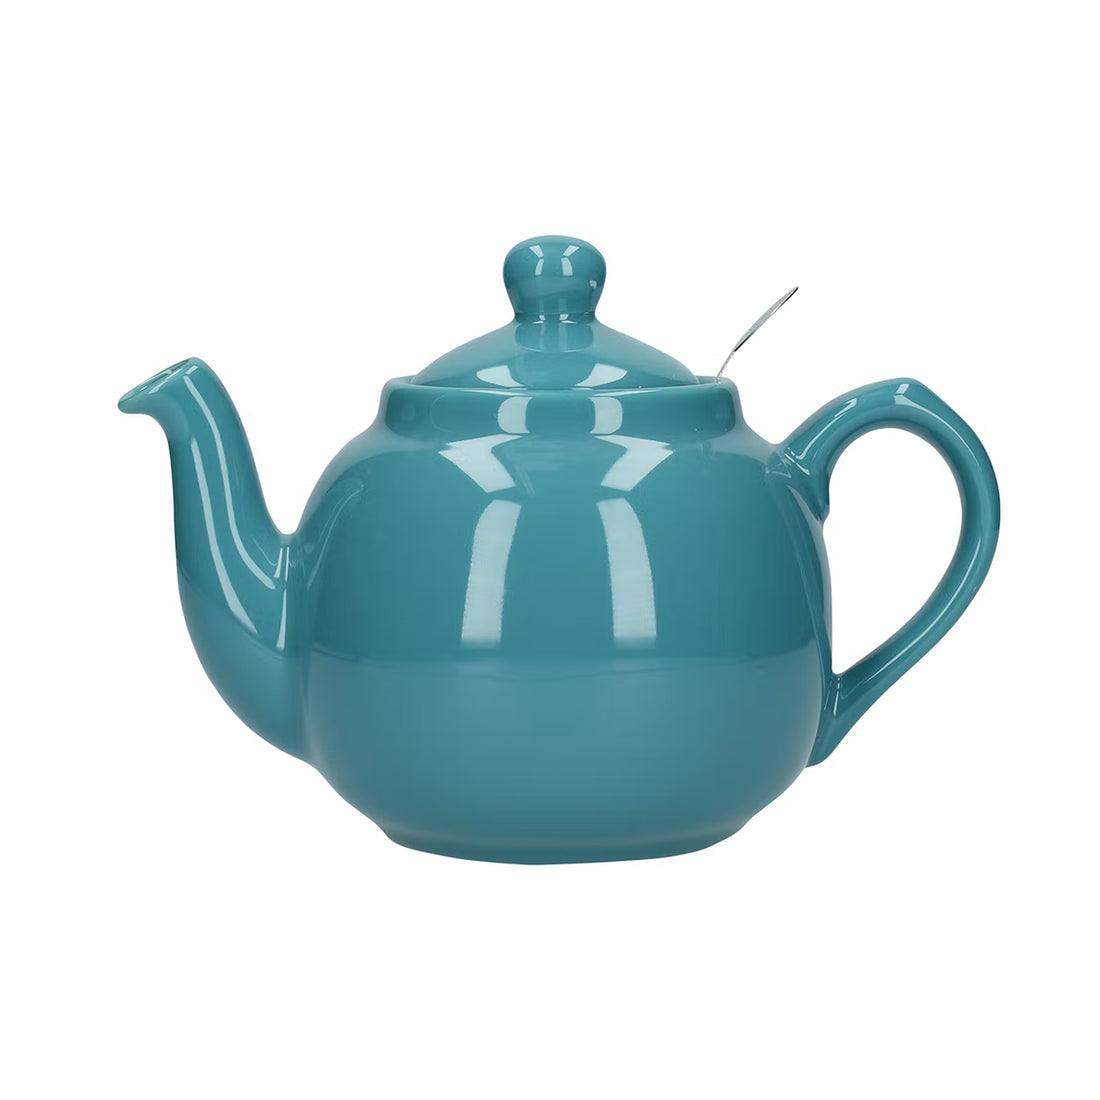 London Pottery, London Pottery Farmhouse 4 Cup Teapot - Aqua, Redber Coffee